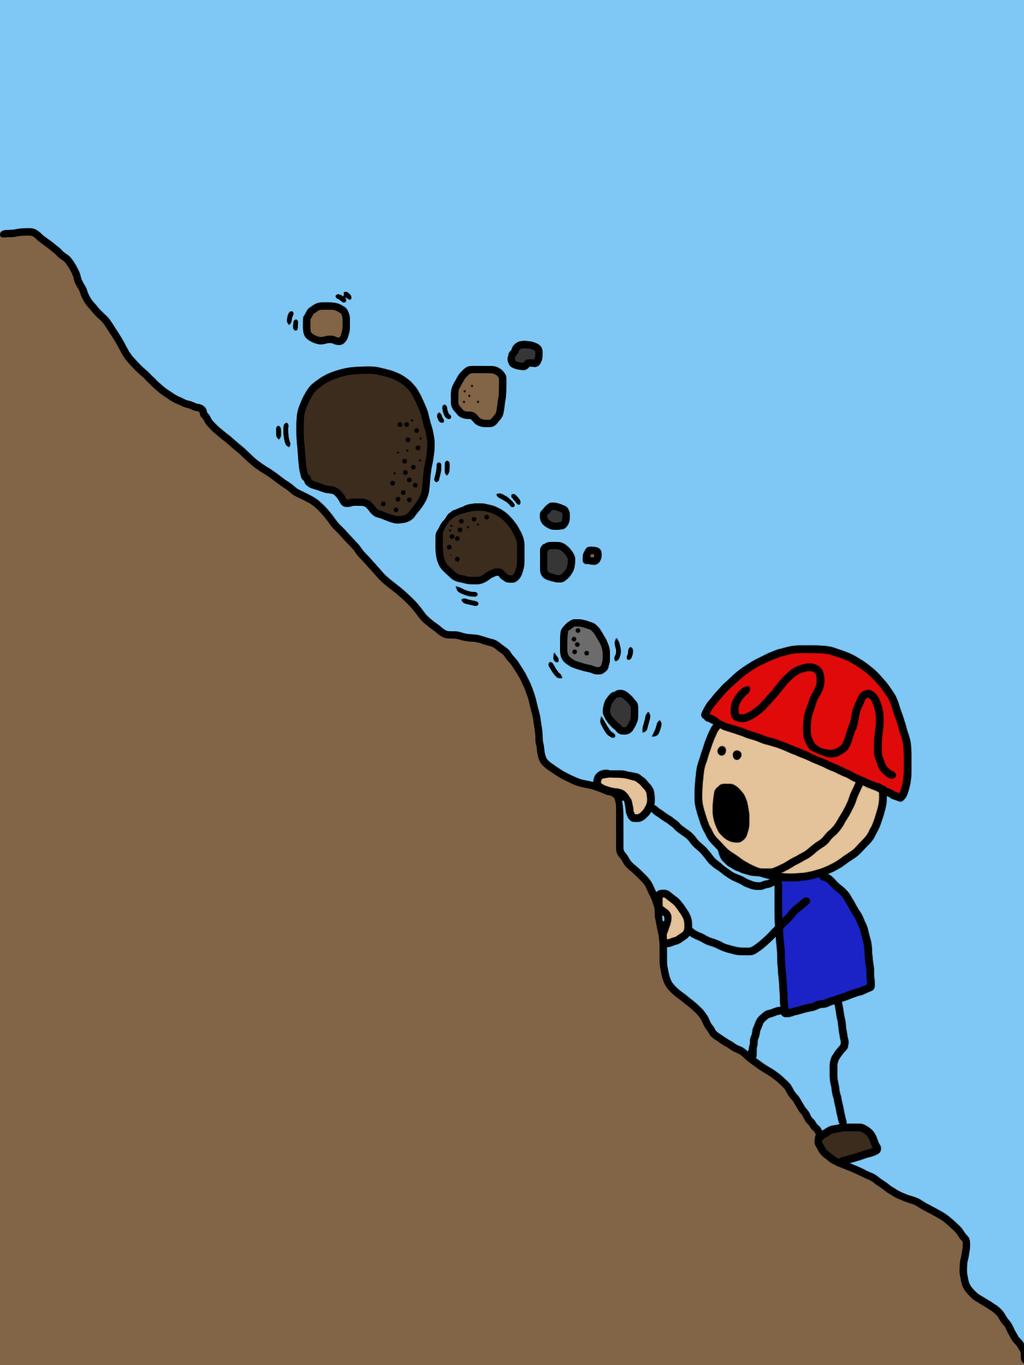 A landslide occurs when rock